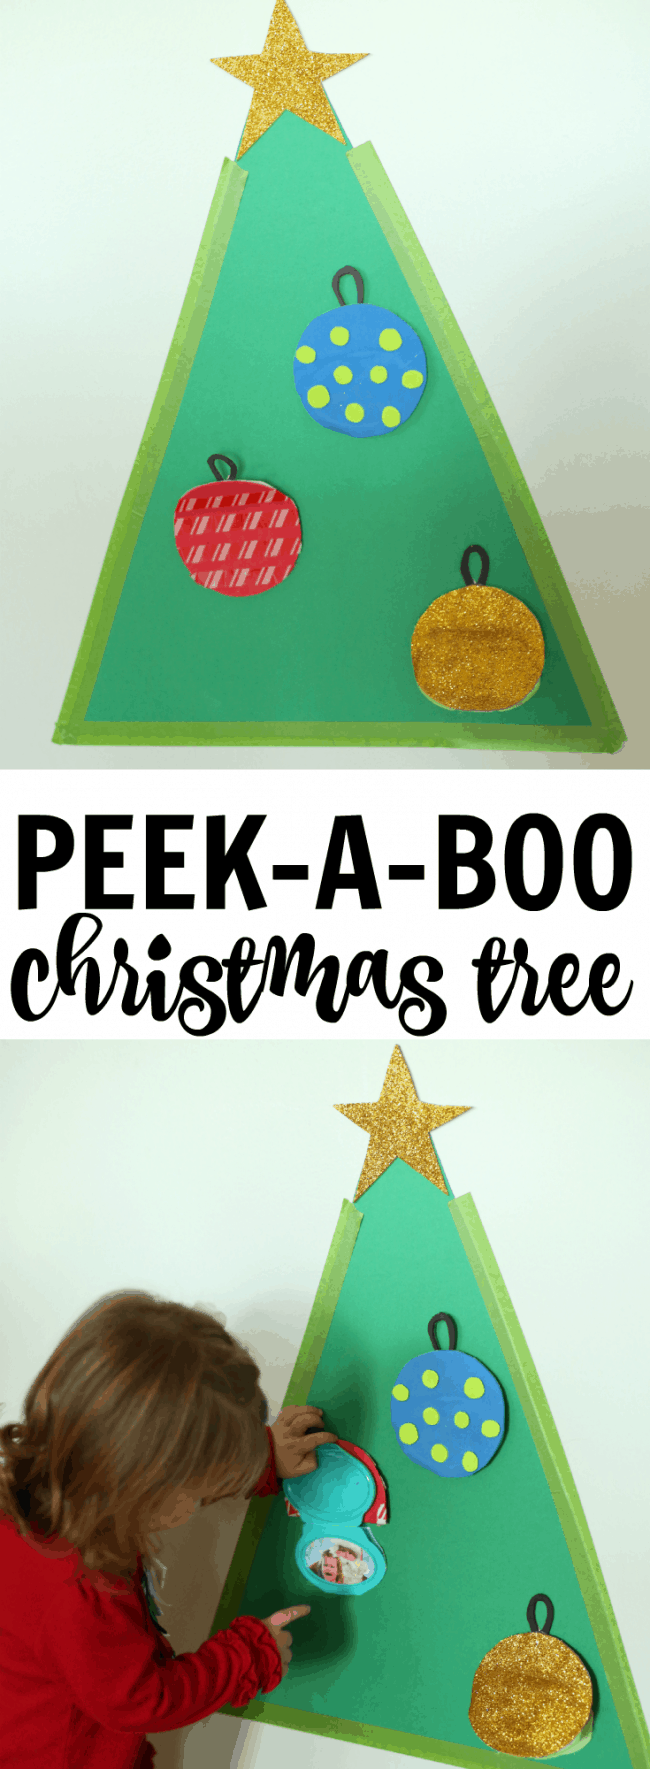 Peek-a-Boo Christmas Tree